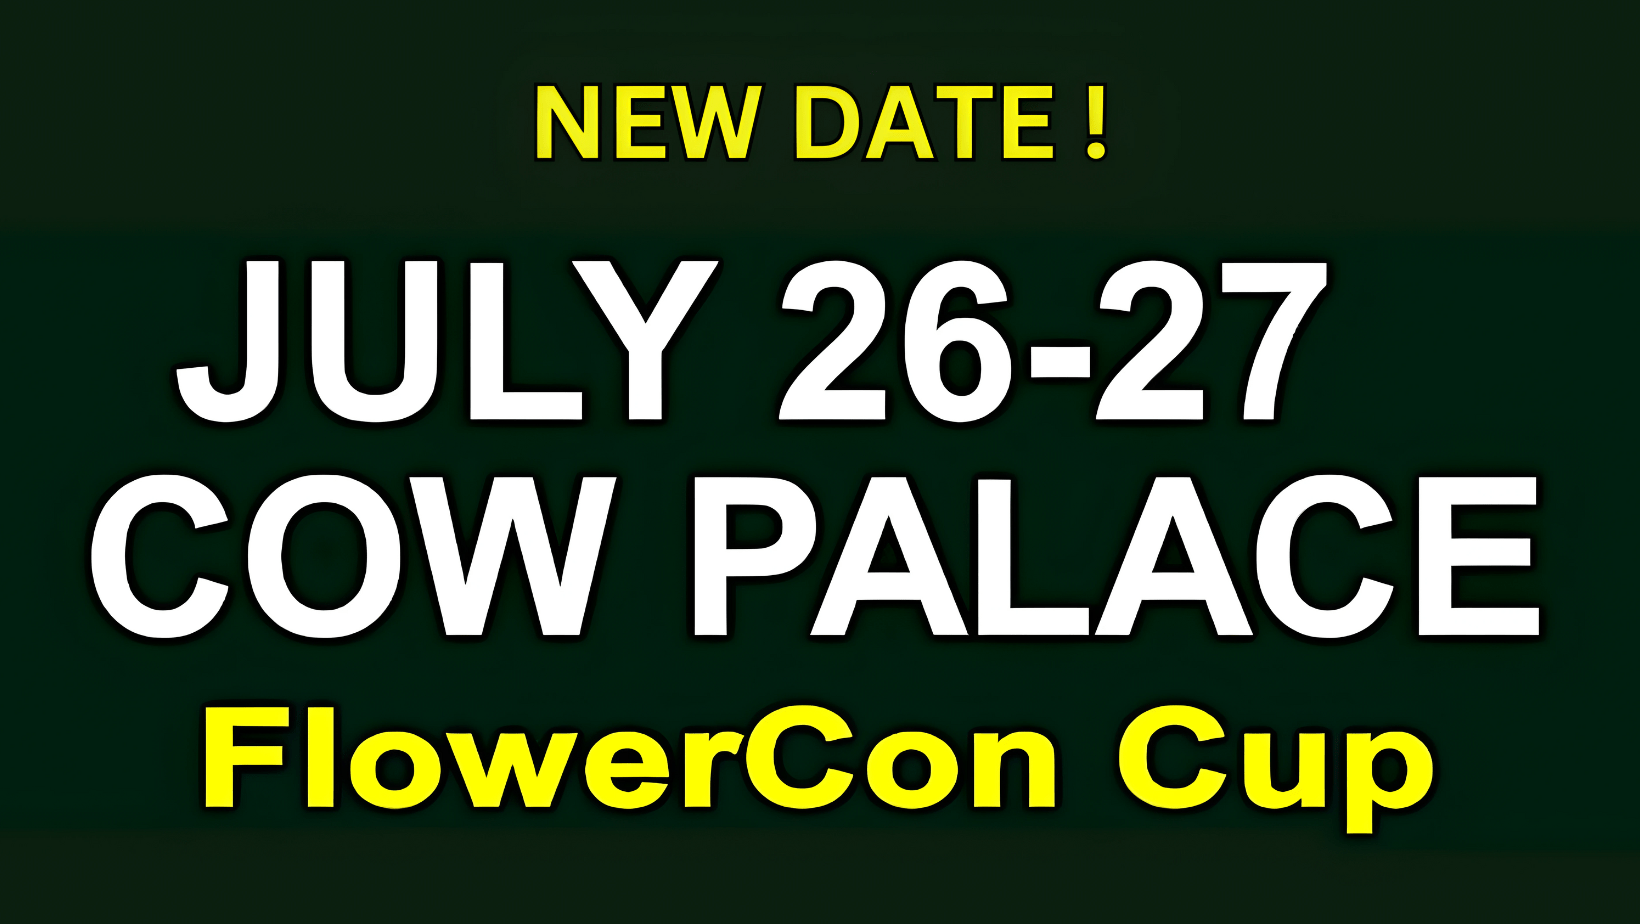 HempCon FlowerCon postponed - new date july 26 27